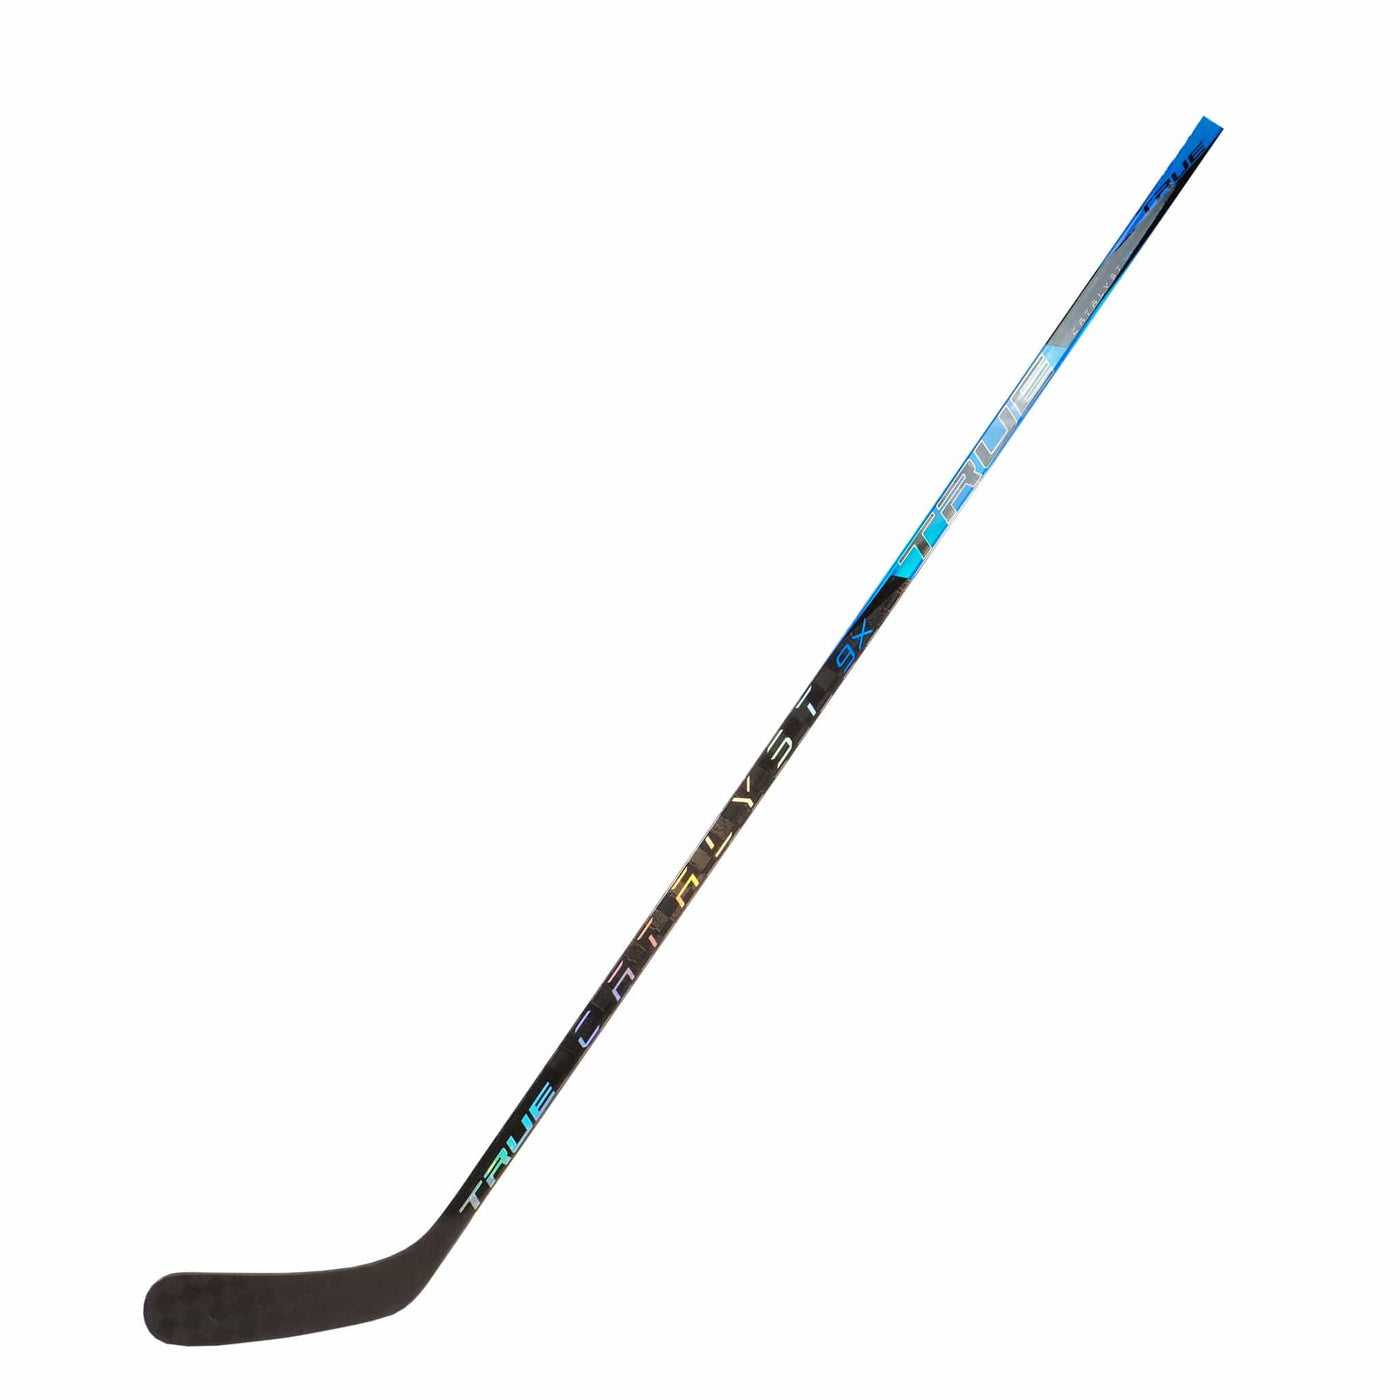 TRUE Catalyst 9X Pro Stock Senior Hockey Stick - Mitch Marner - TC2.5 - R-80 - The Hockey Shop Source For Sports